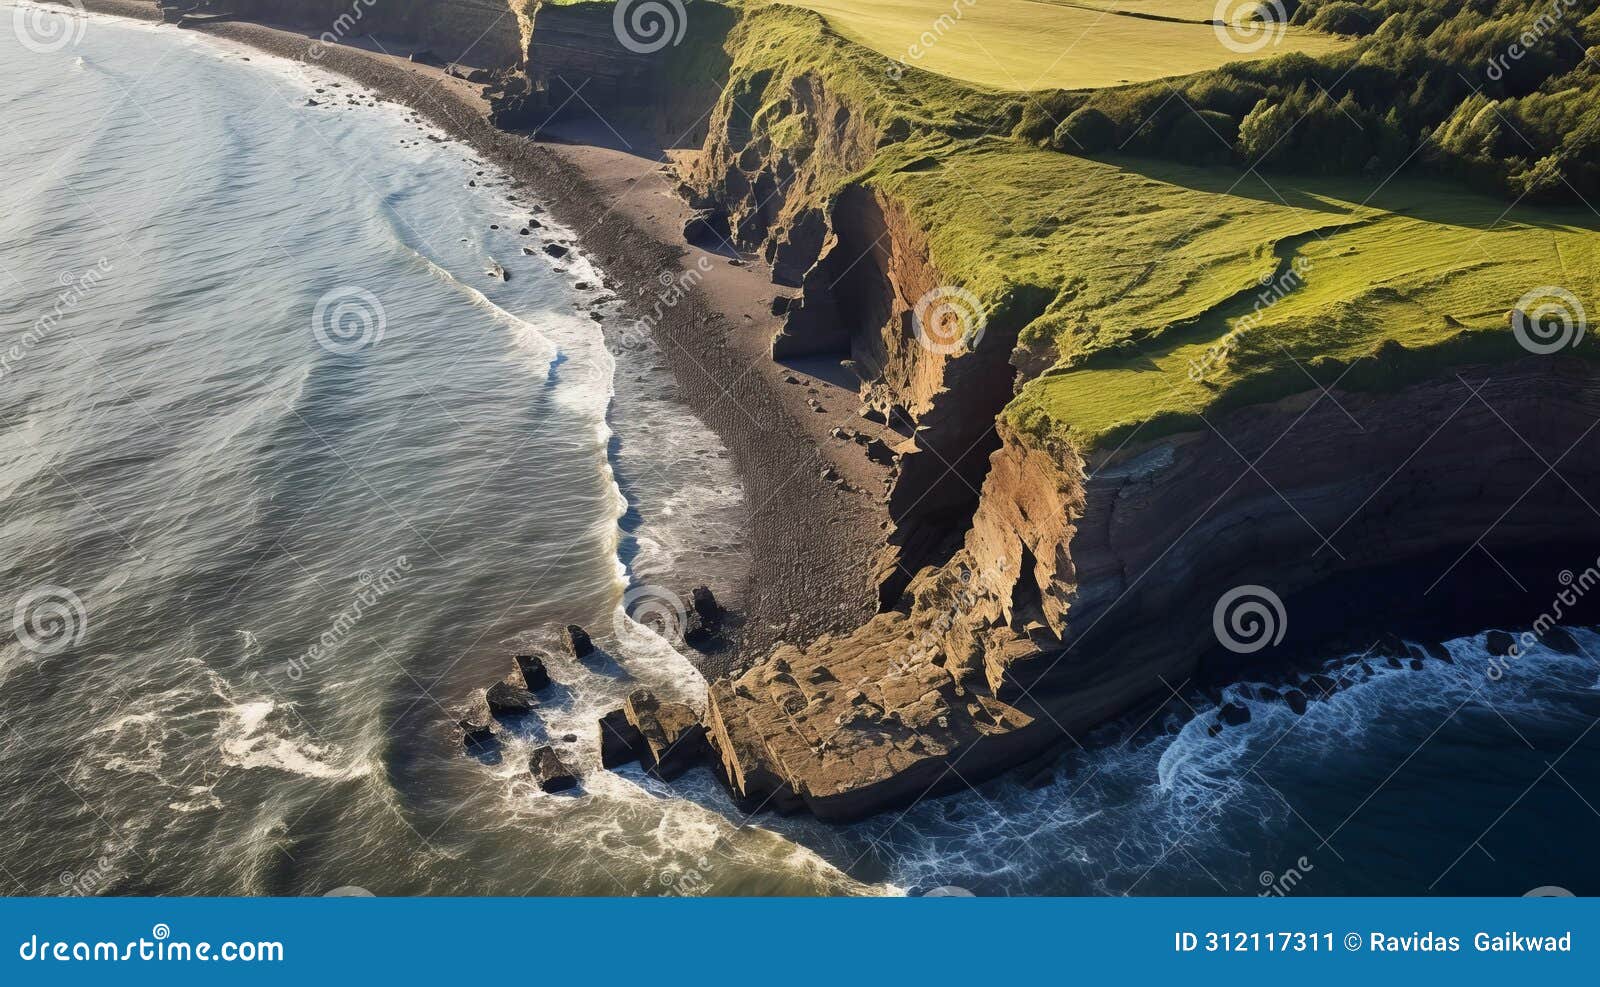 coastline altered by coastal erosion